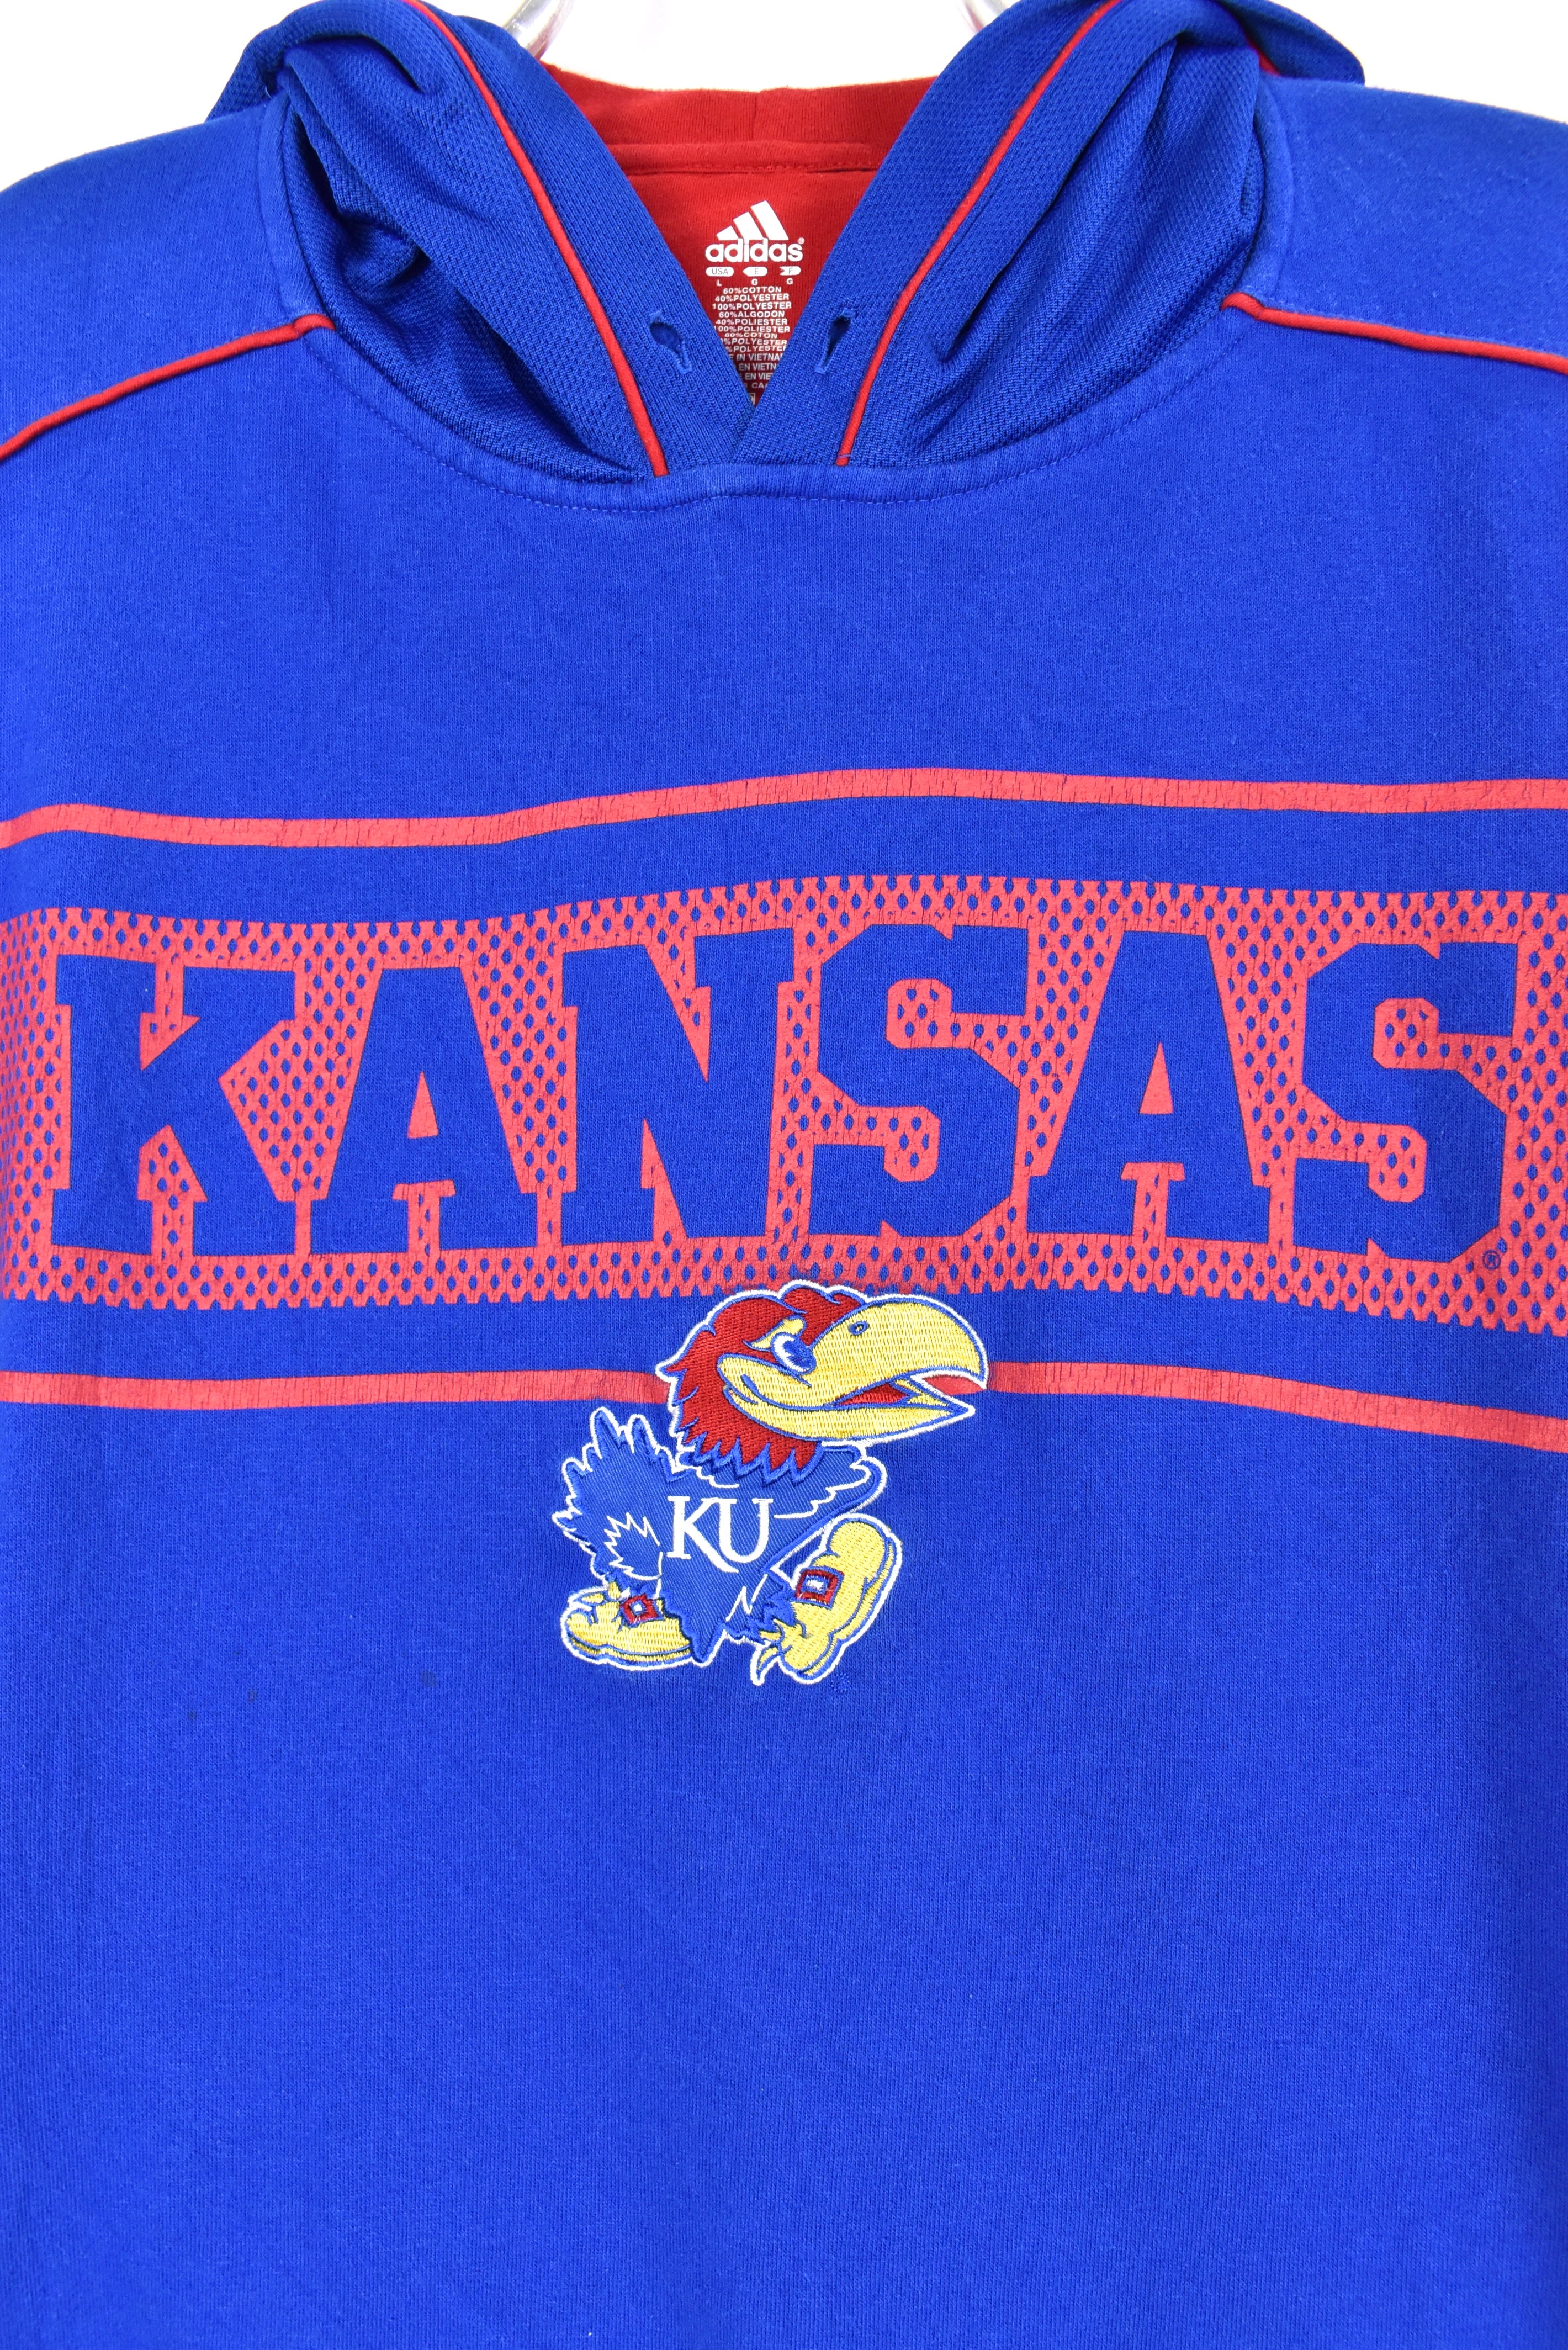 Modern University of Kansas hoodie, blue embroidered sweatshirt - AU Large COLLEGE